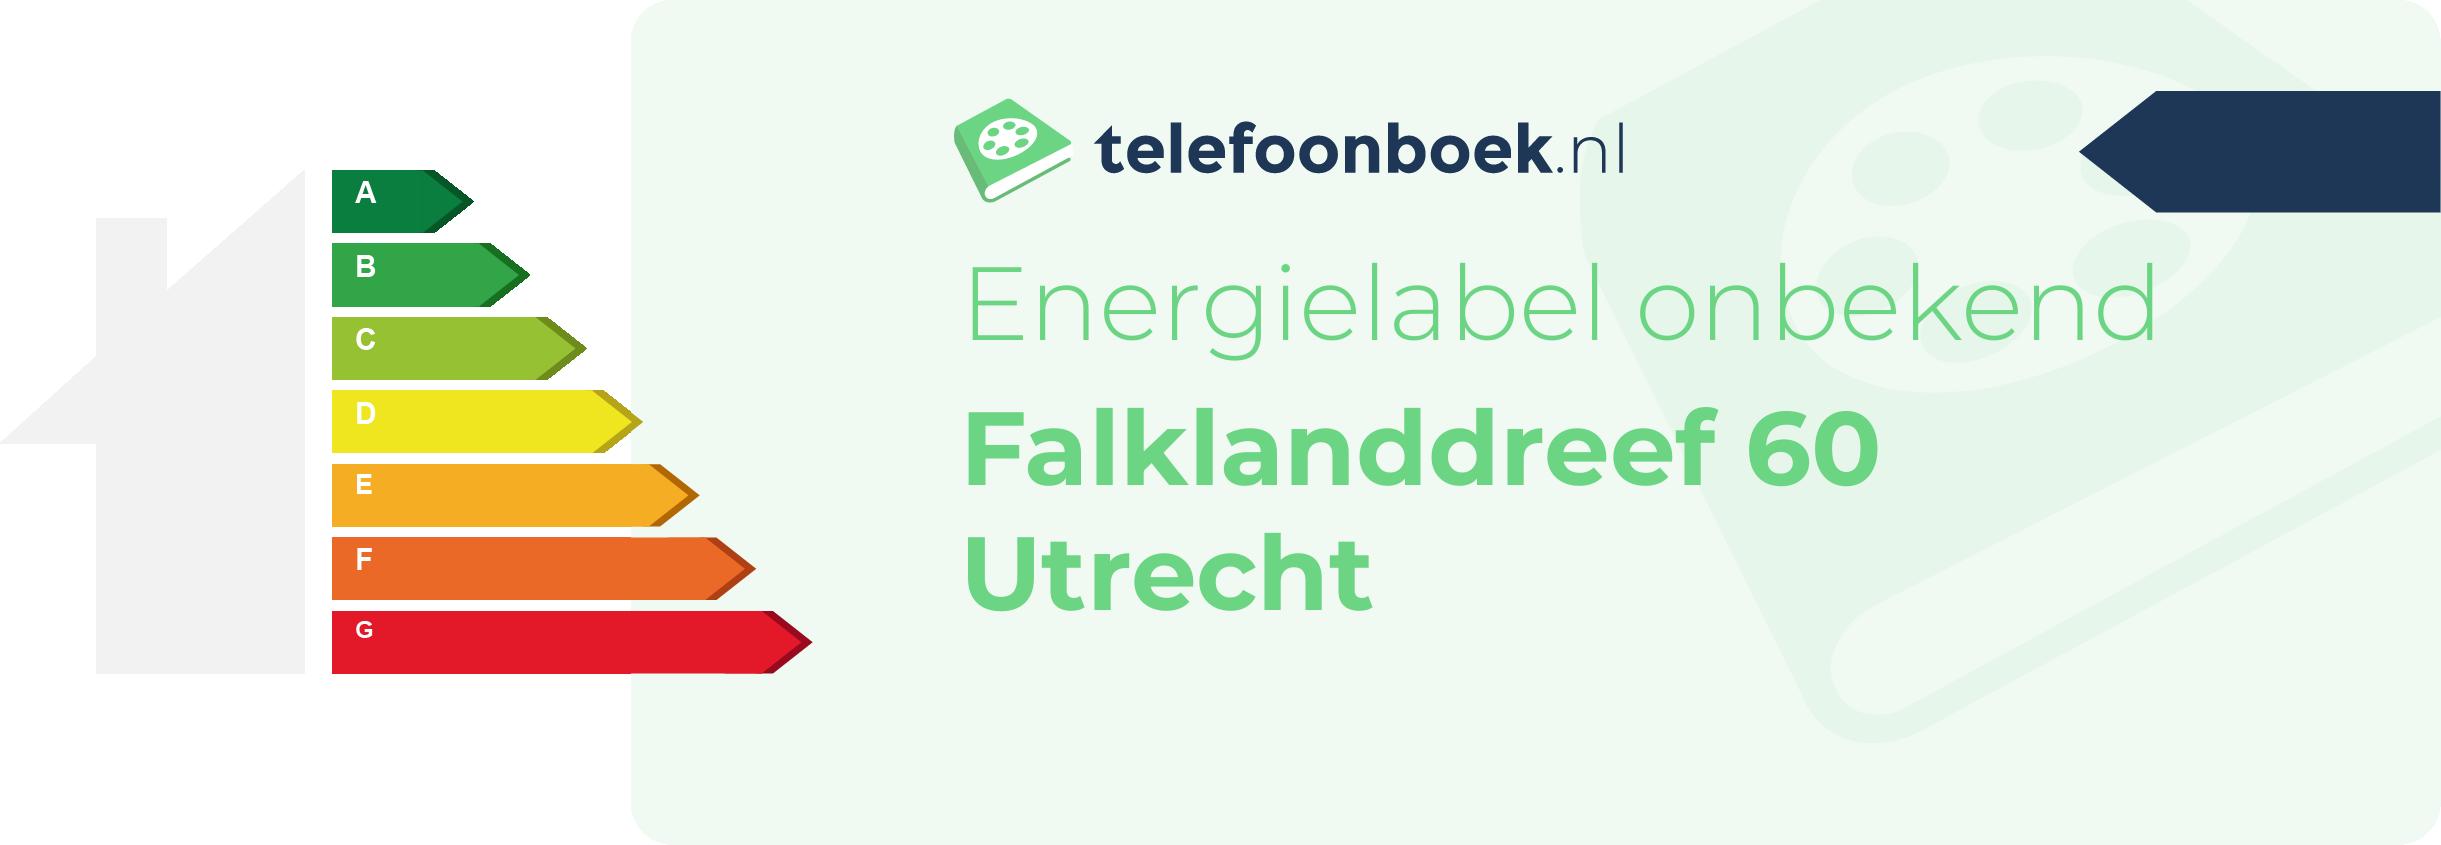 Energielabel Falklanddreef 60 Utrecht